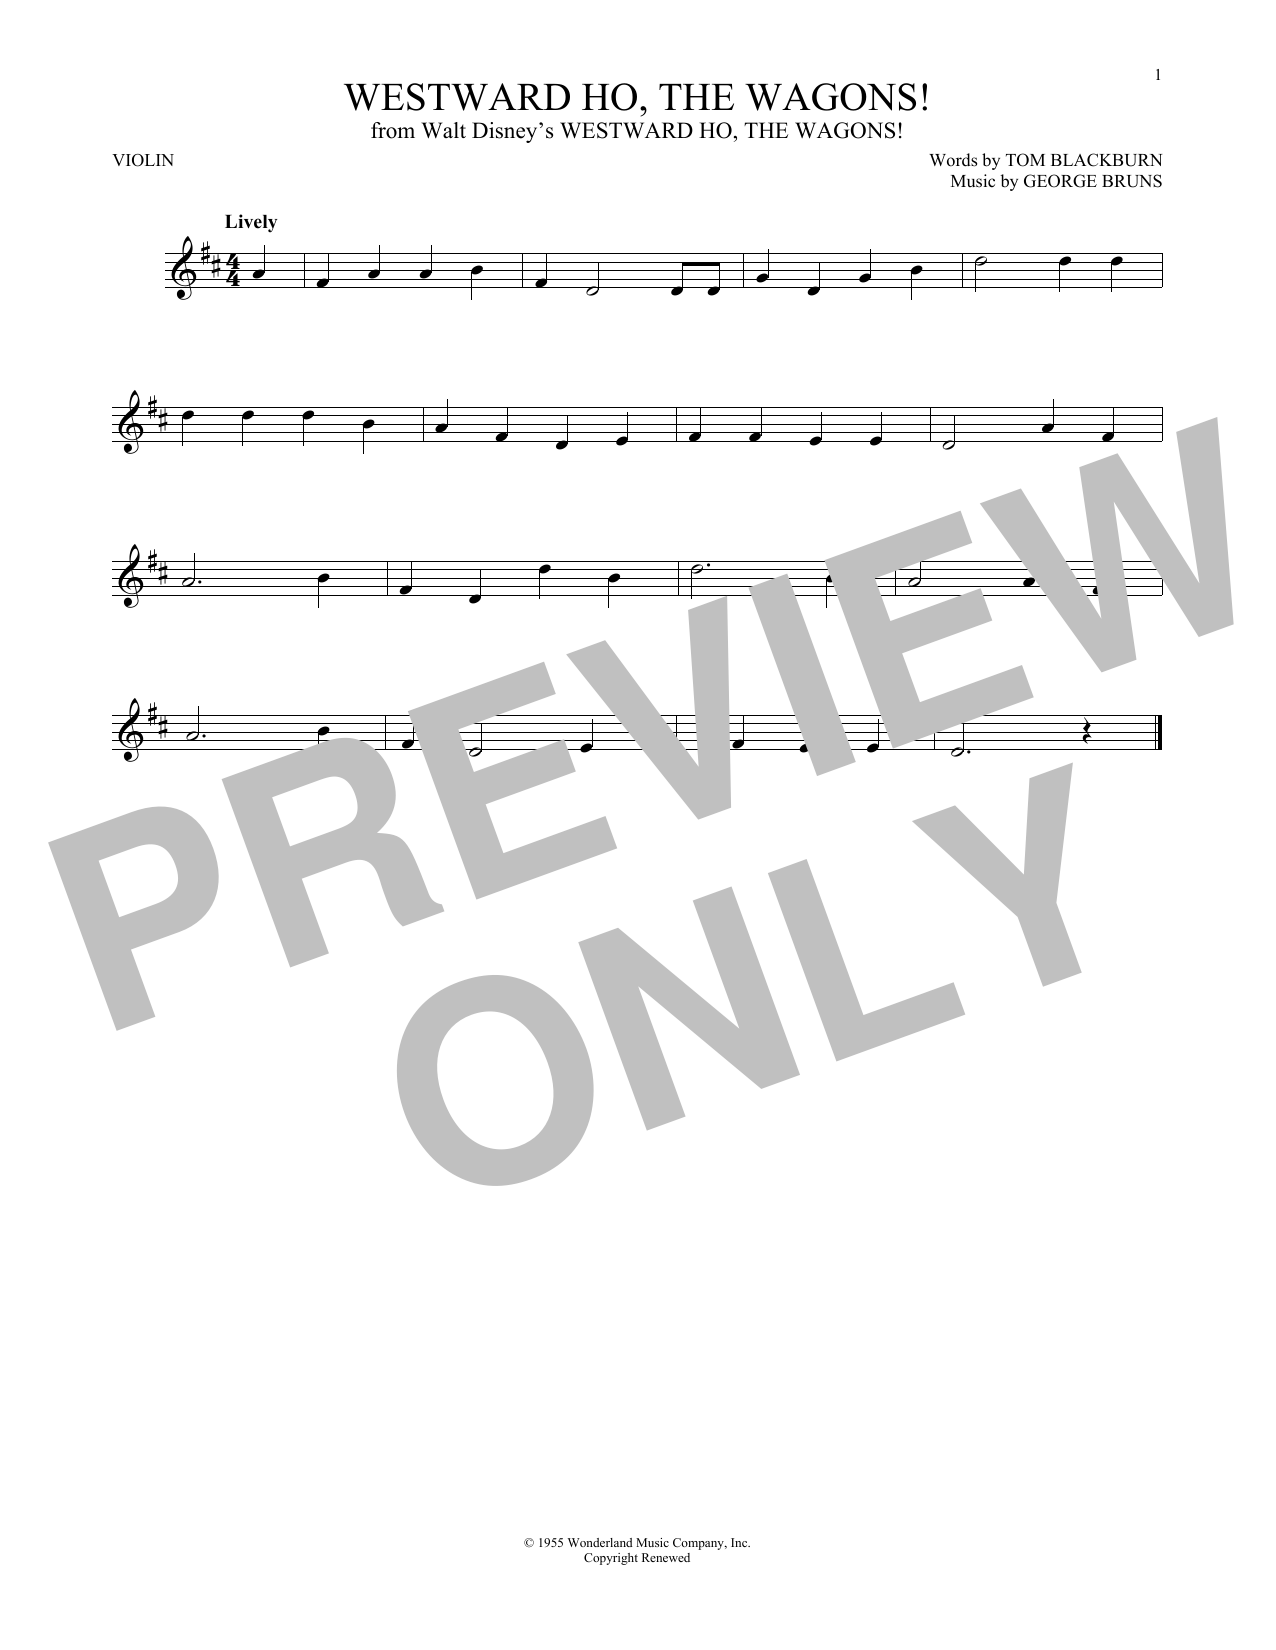 George Bruns Westward Ho, The Wagons! Sheet Music Notes & Chords for Violin - Download or Print PDF